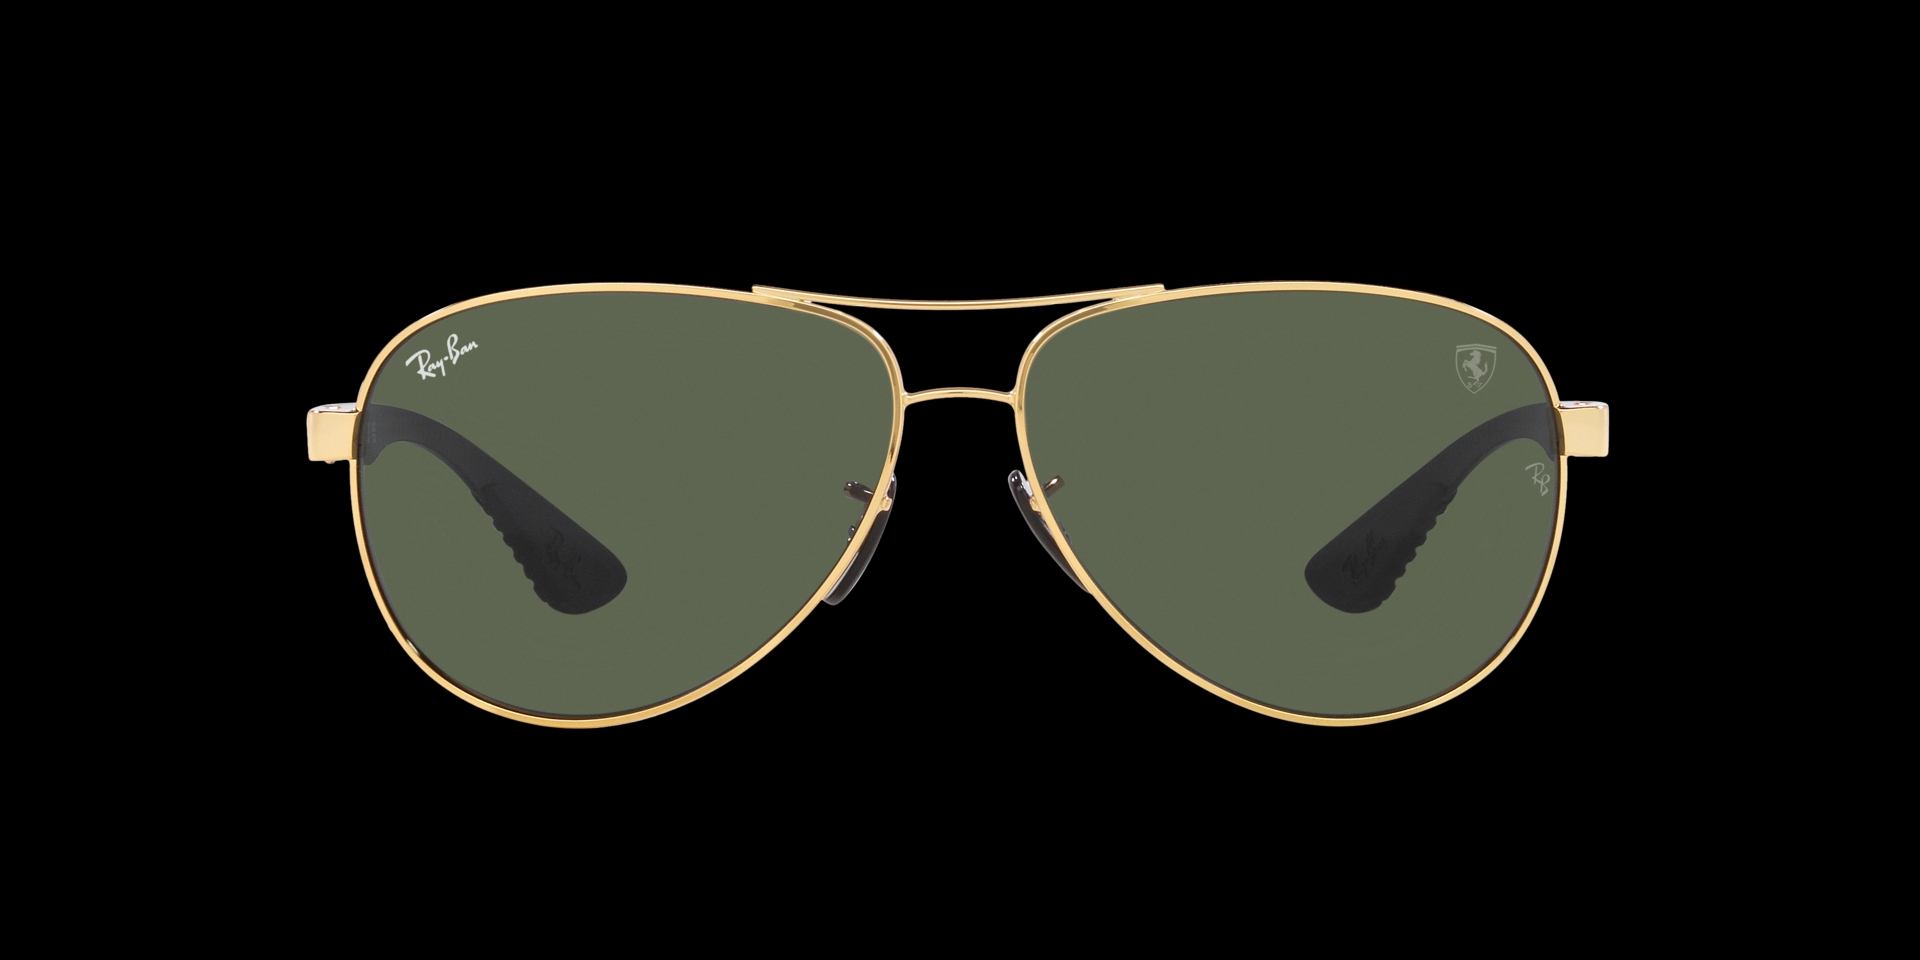 Black power sunglasses with Blue lens